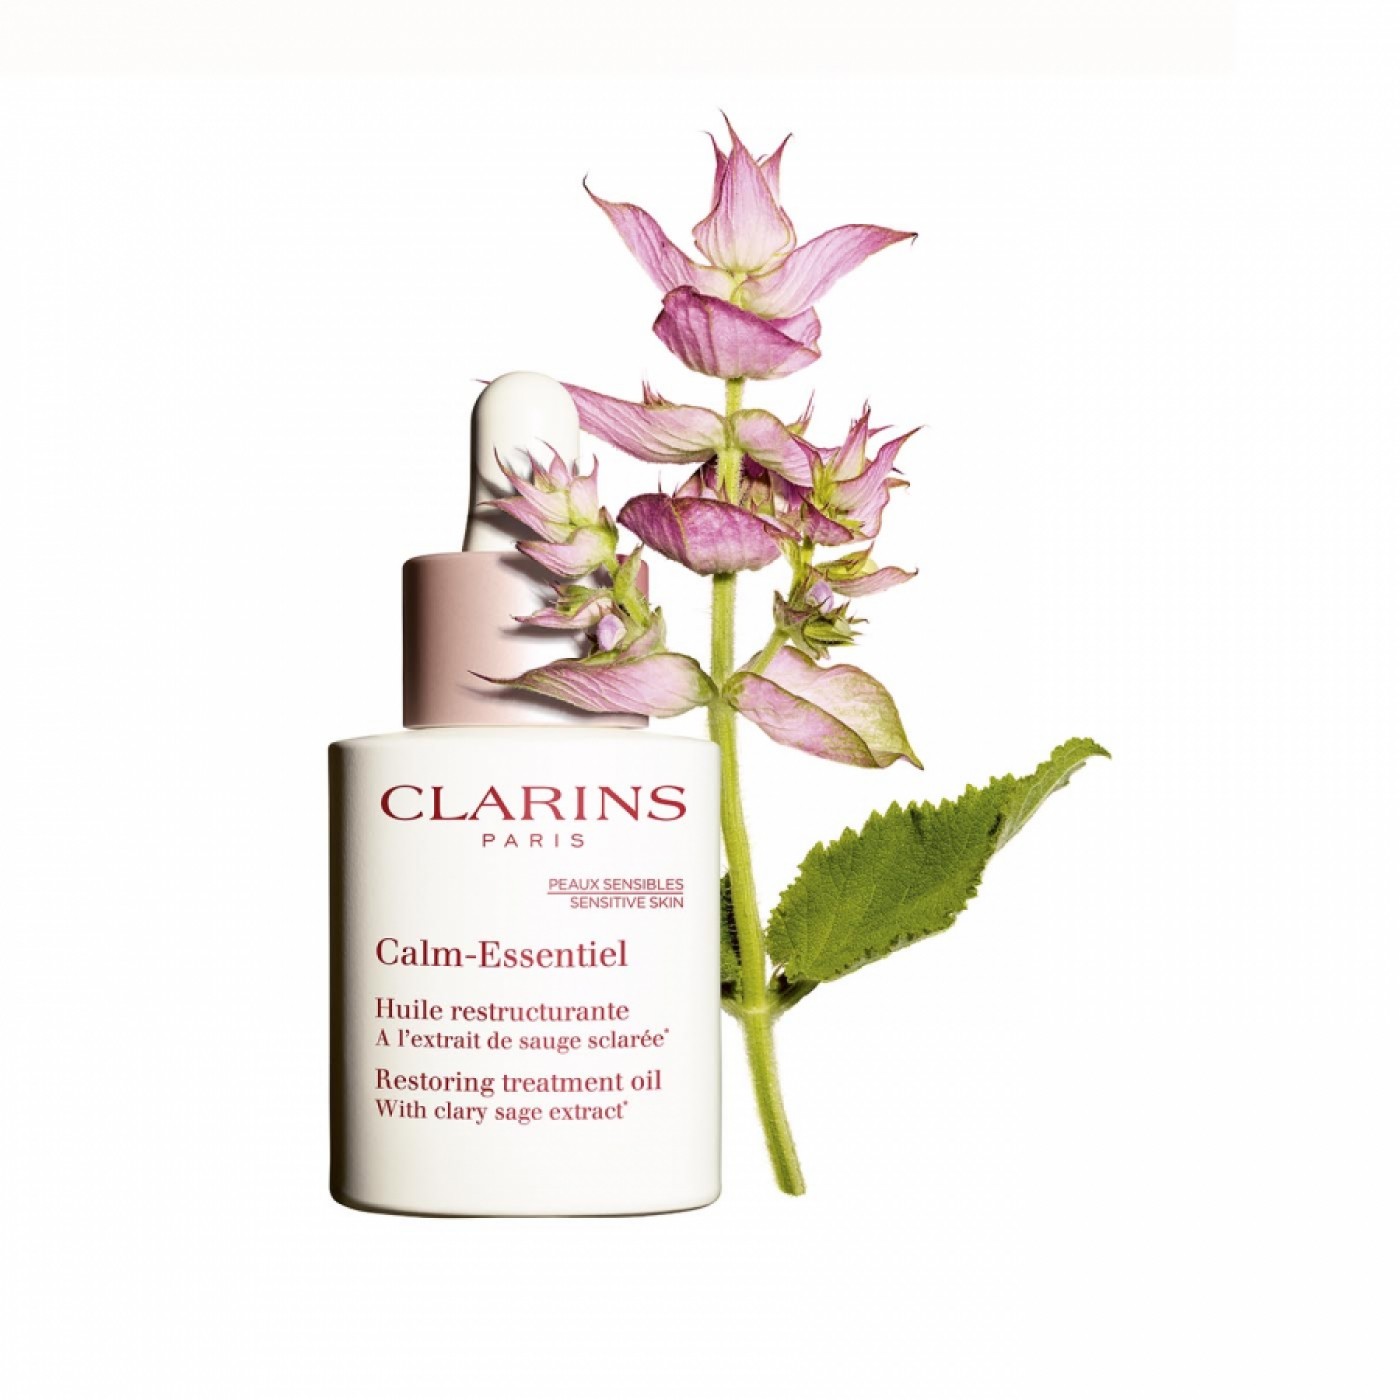 Clarins Calm-Essentiel Rejuvenating Treatment Oil 30 ml - Clarins Rahatlatıcı Gençlik Yağı